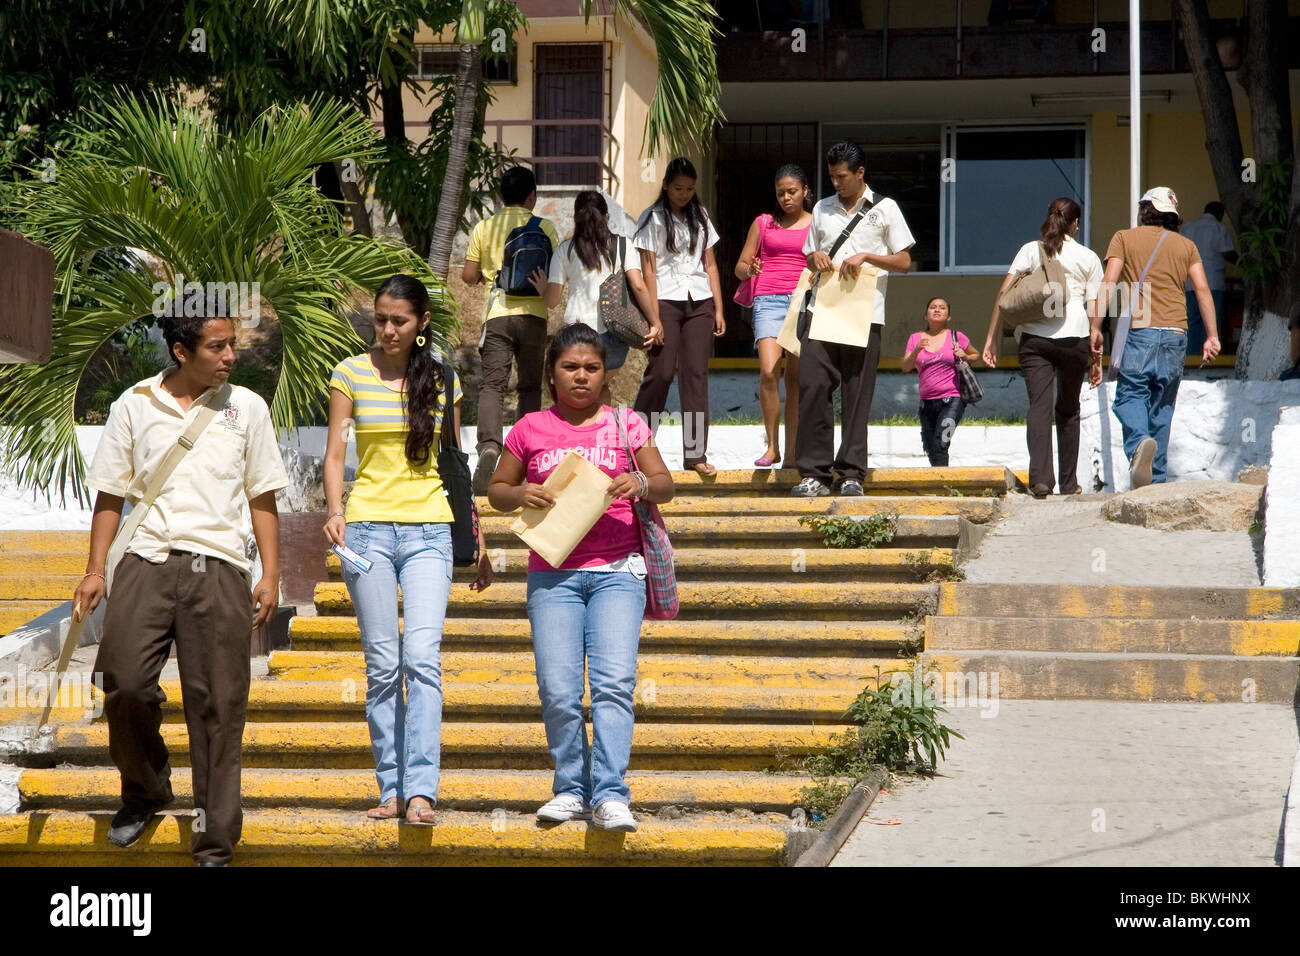 Mexican college students on the campus of Universidad Autonoma de Guerro located in Acapulco, Guerrero, Mexico. Stock Photo